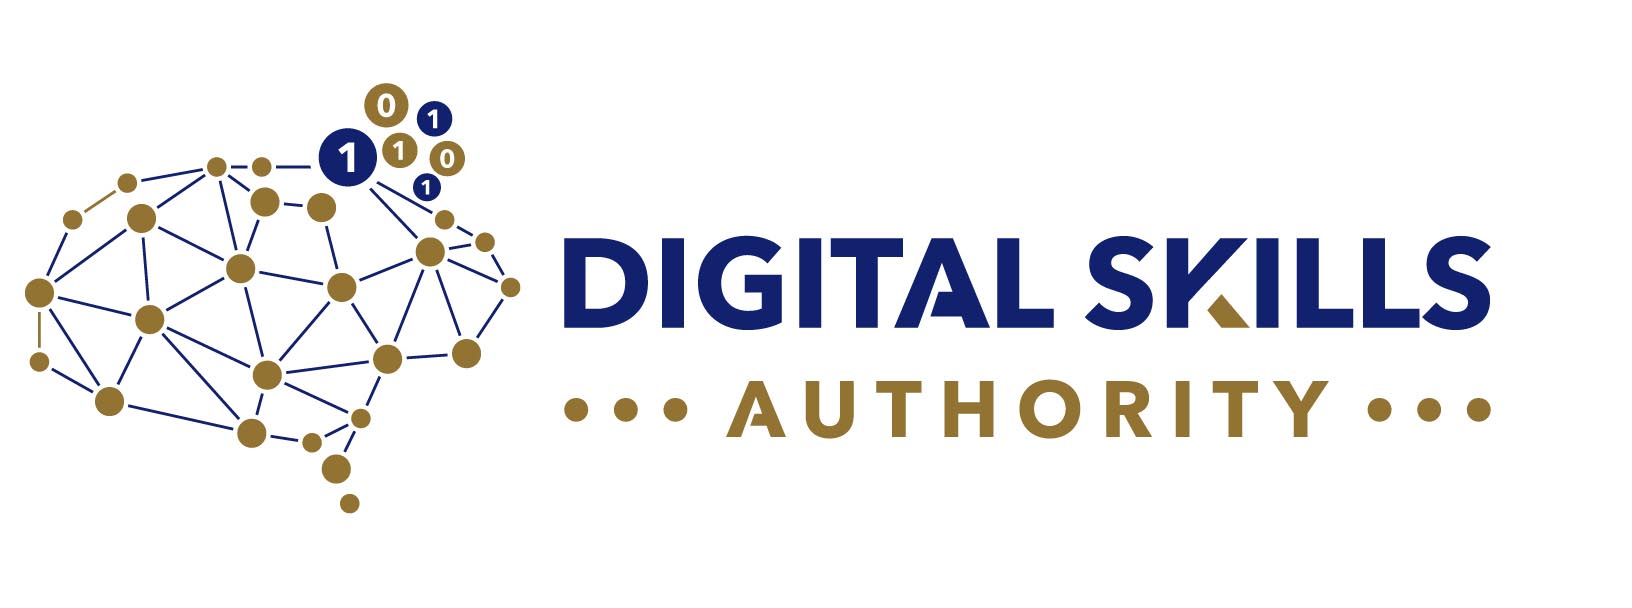 Digital Skills Authority